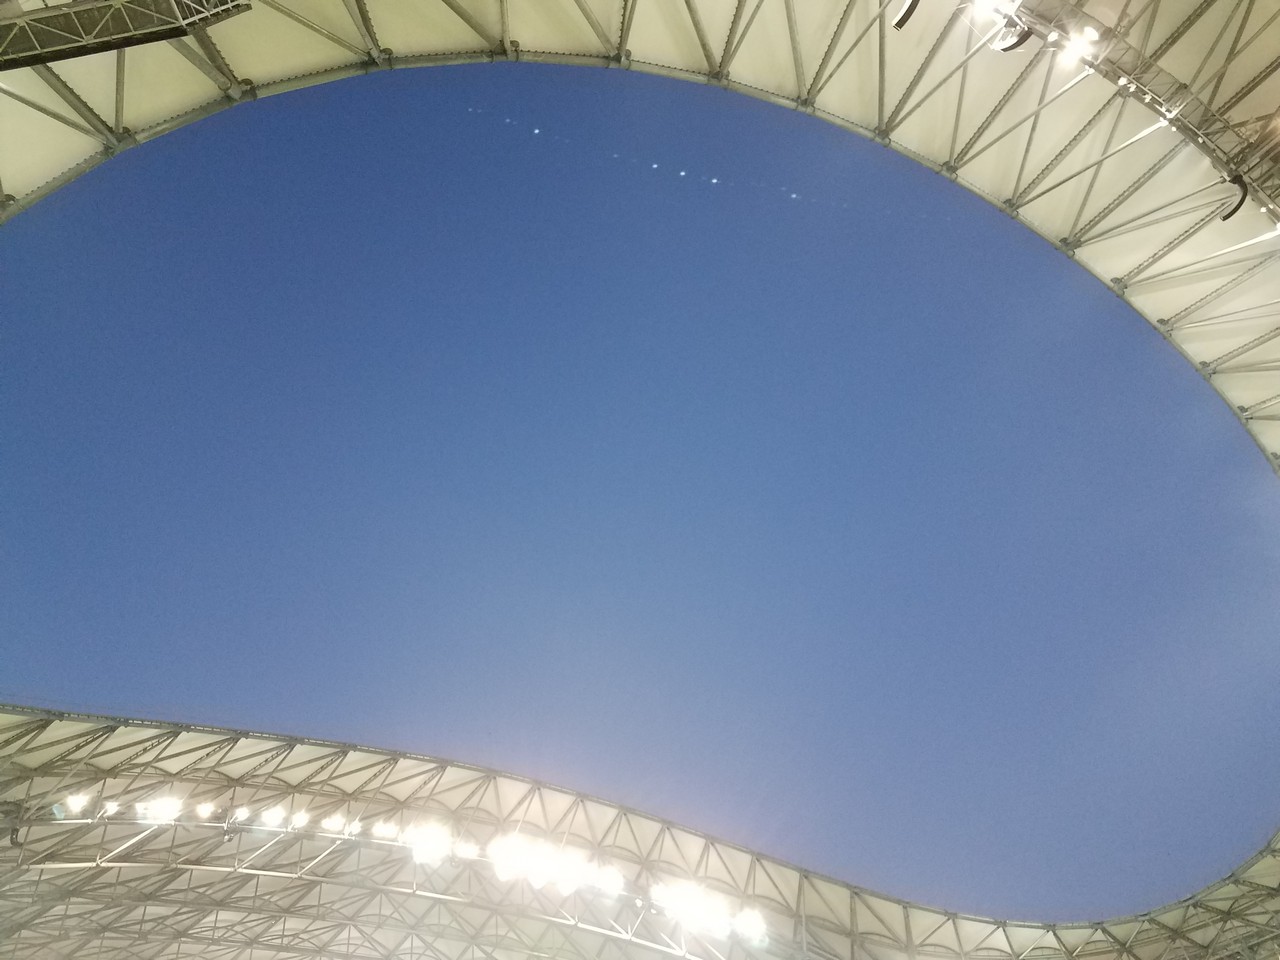 a blue sky above a stadium